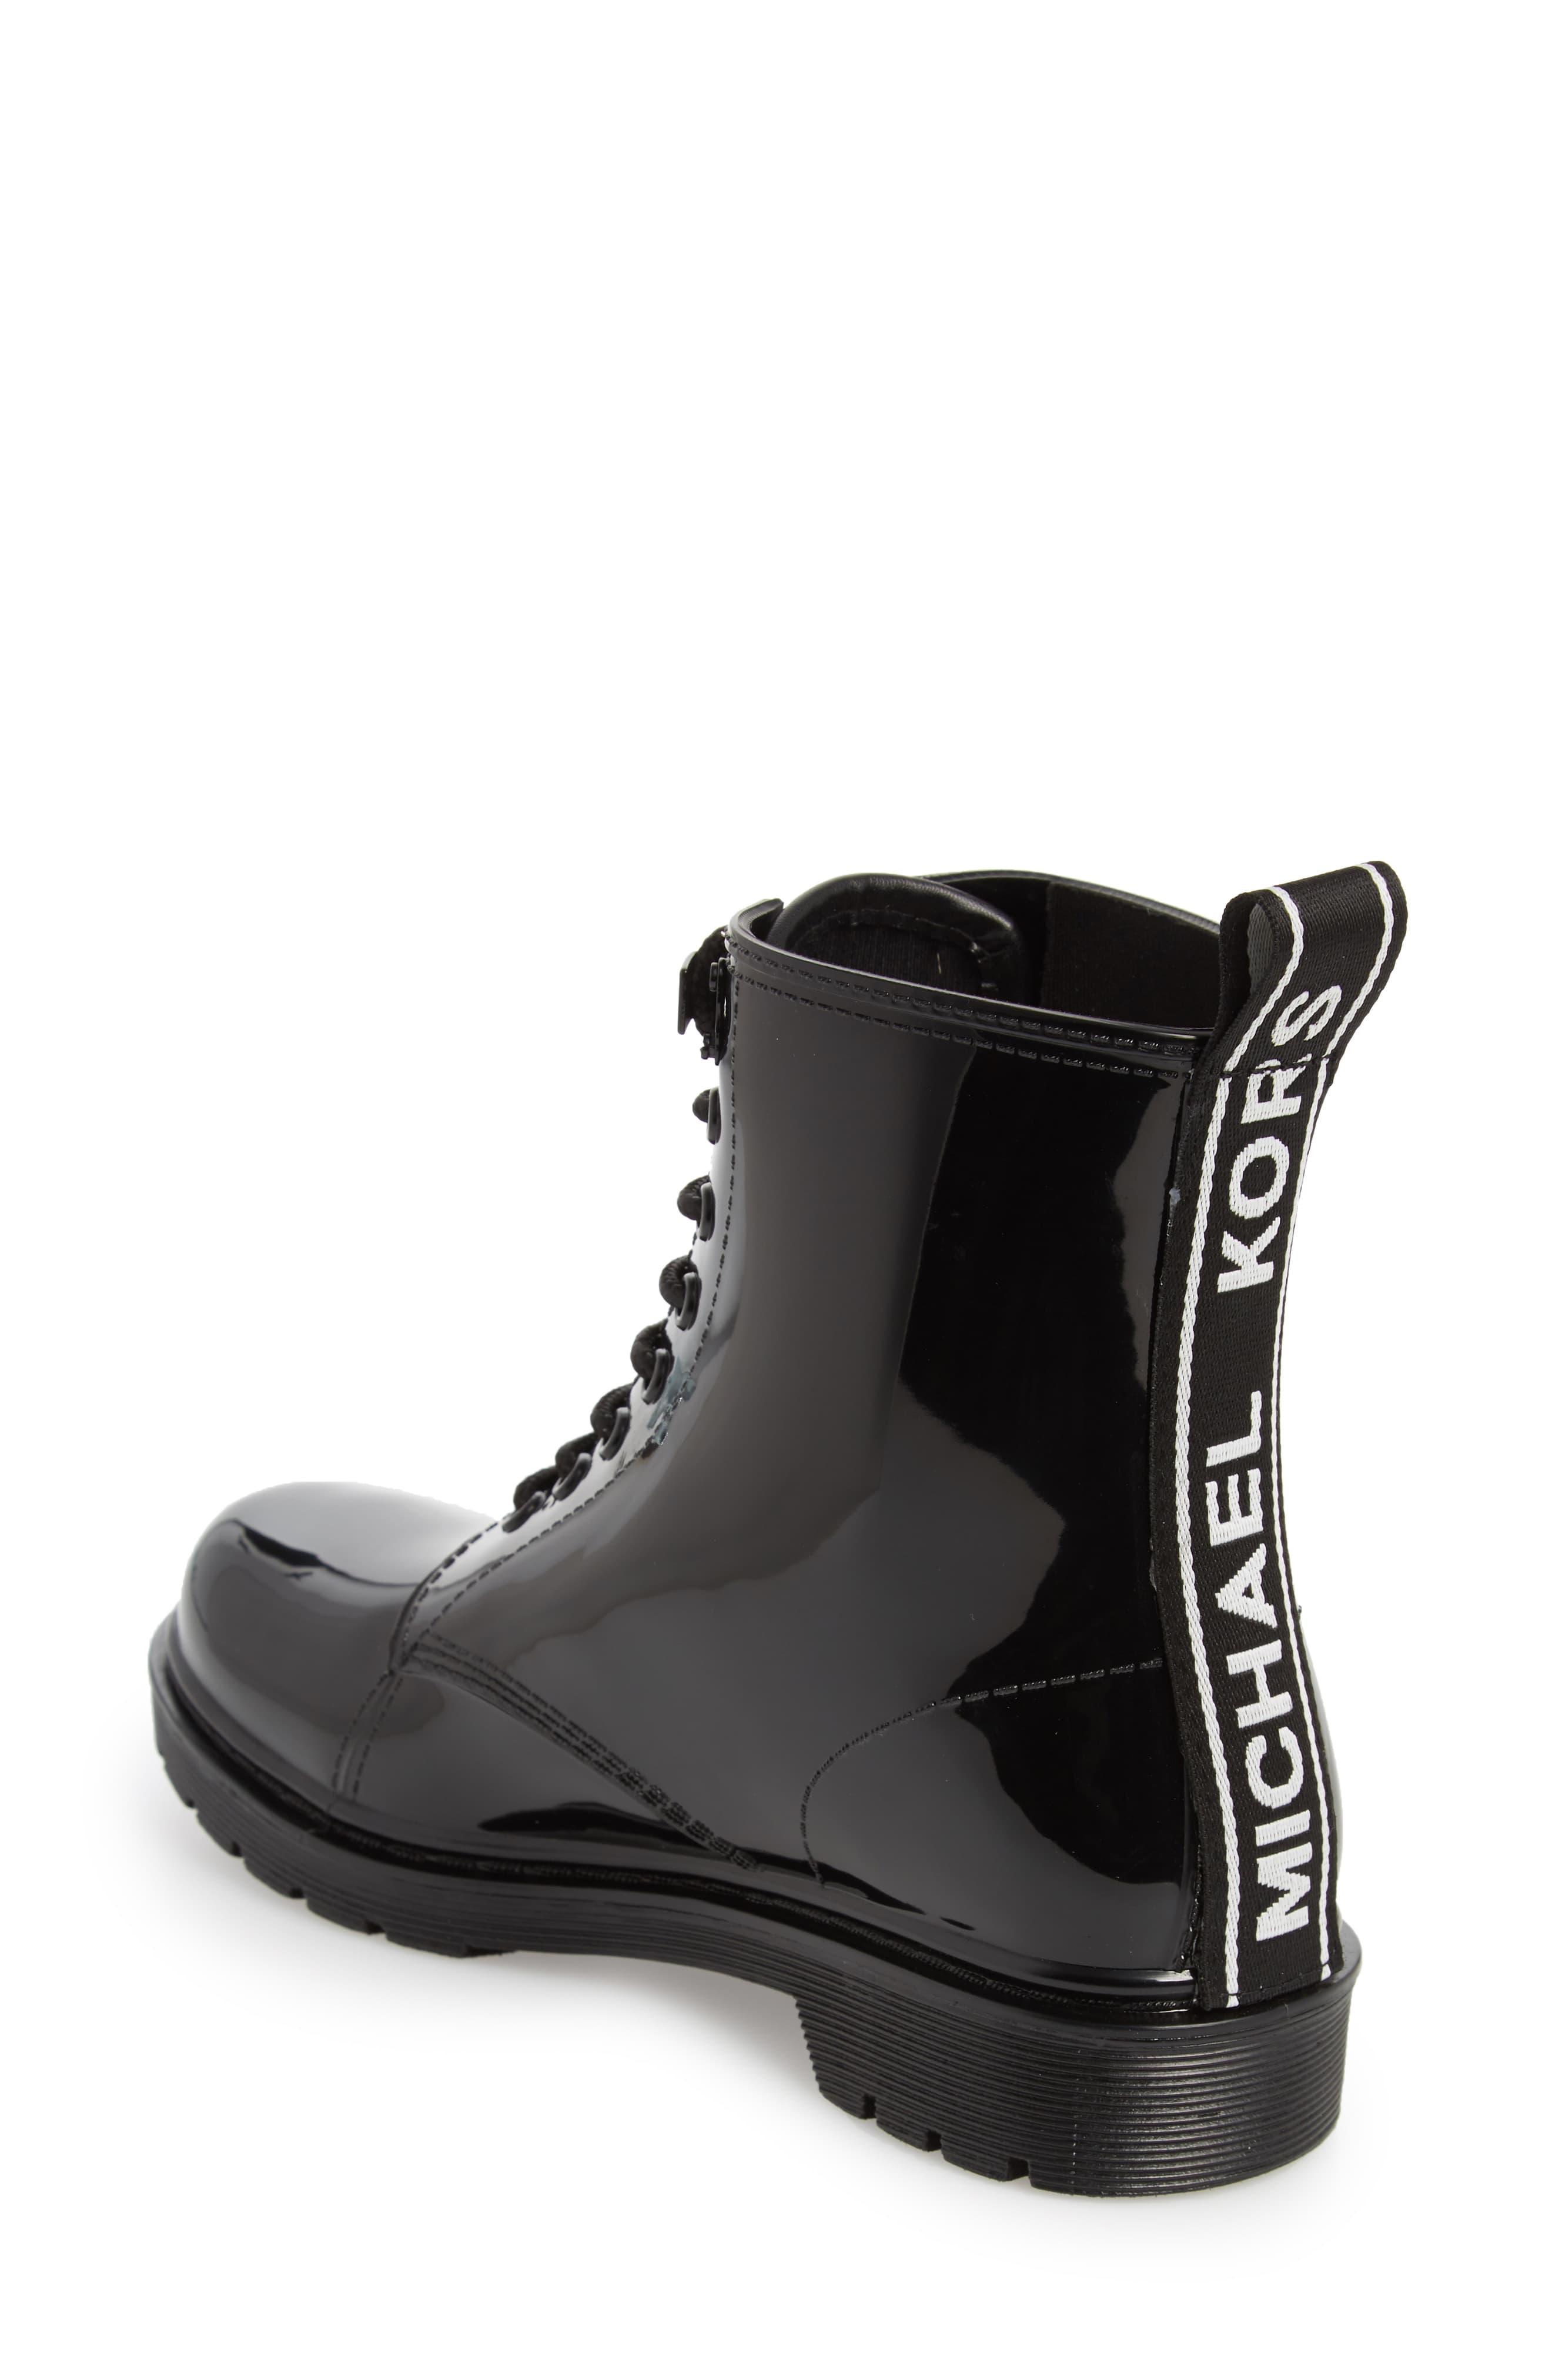 Michael Kors Denim Tavie Logo Tape Lace-up Rain Boot in Black - Lyst